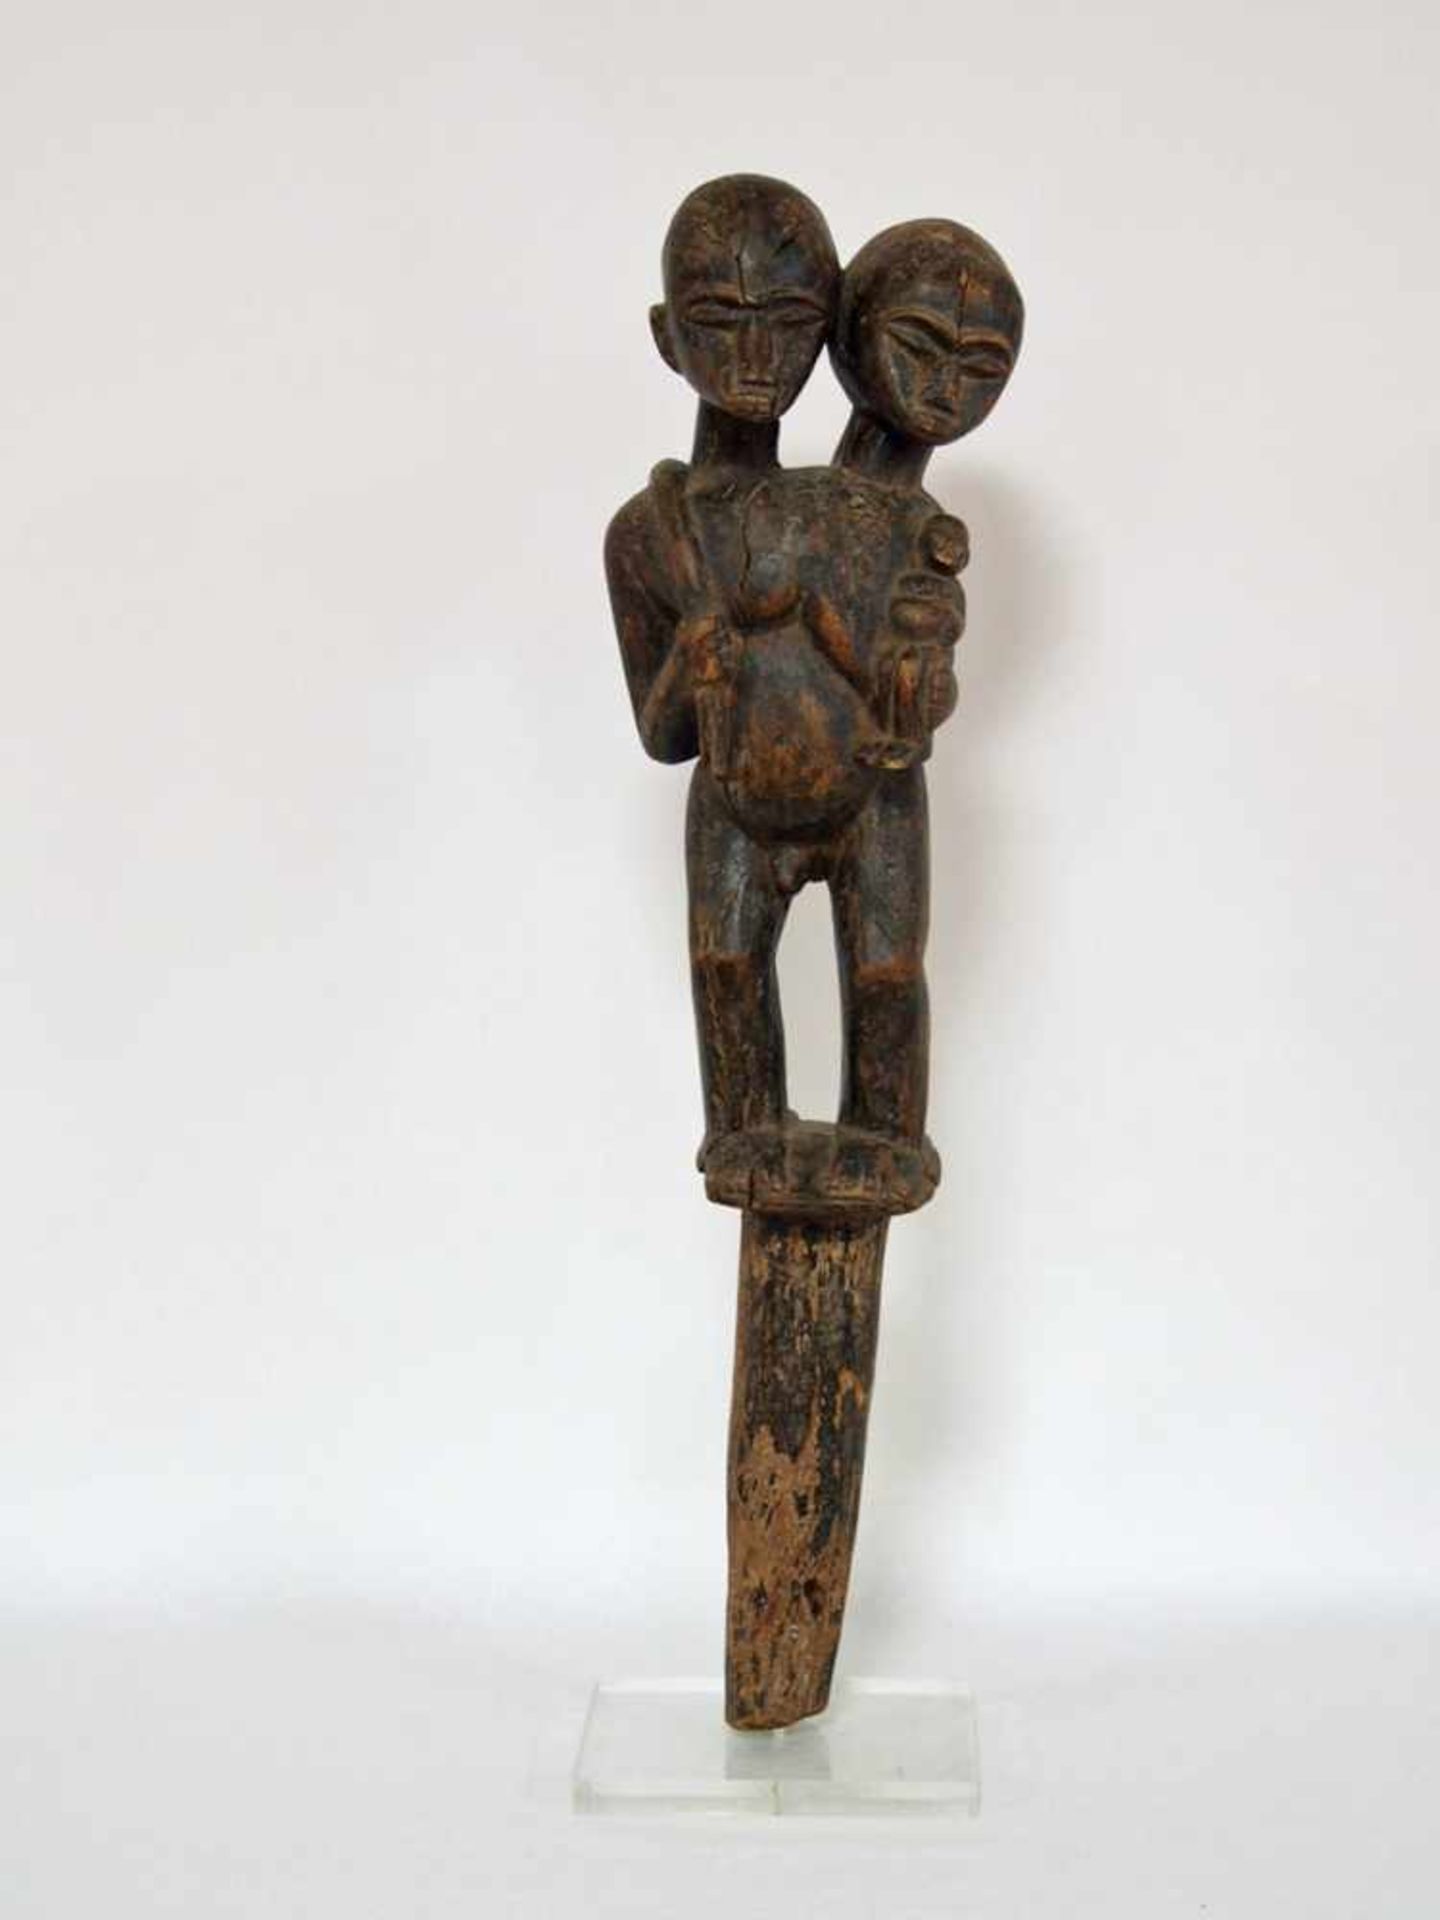 Stab mit ZwillingsfigurHolz, geschnitzt, Dogon, Mali, 1. Hälfte 20. Jahrhundert, Höhe 94 cm- - -25.